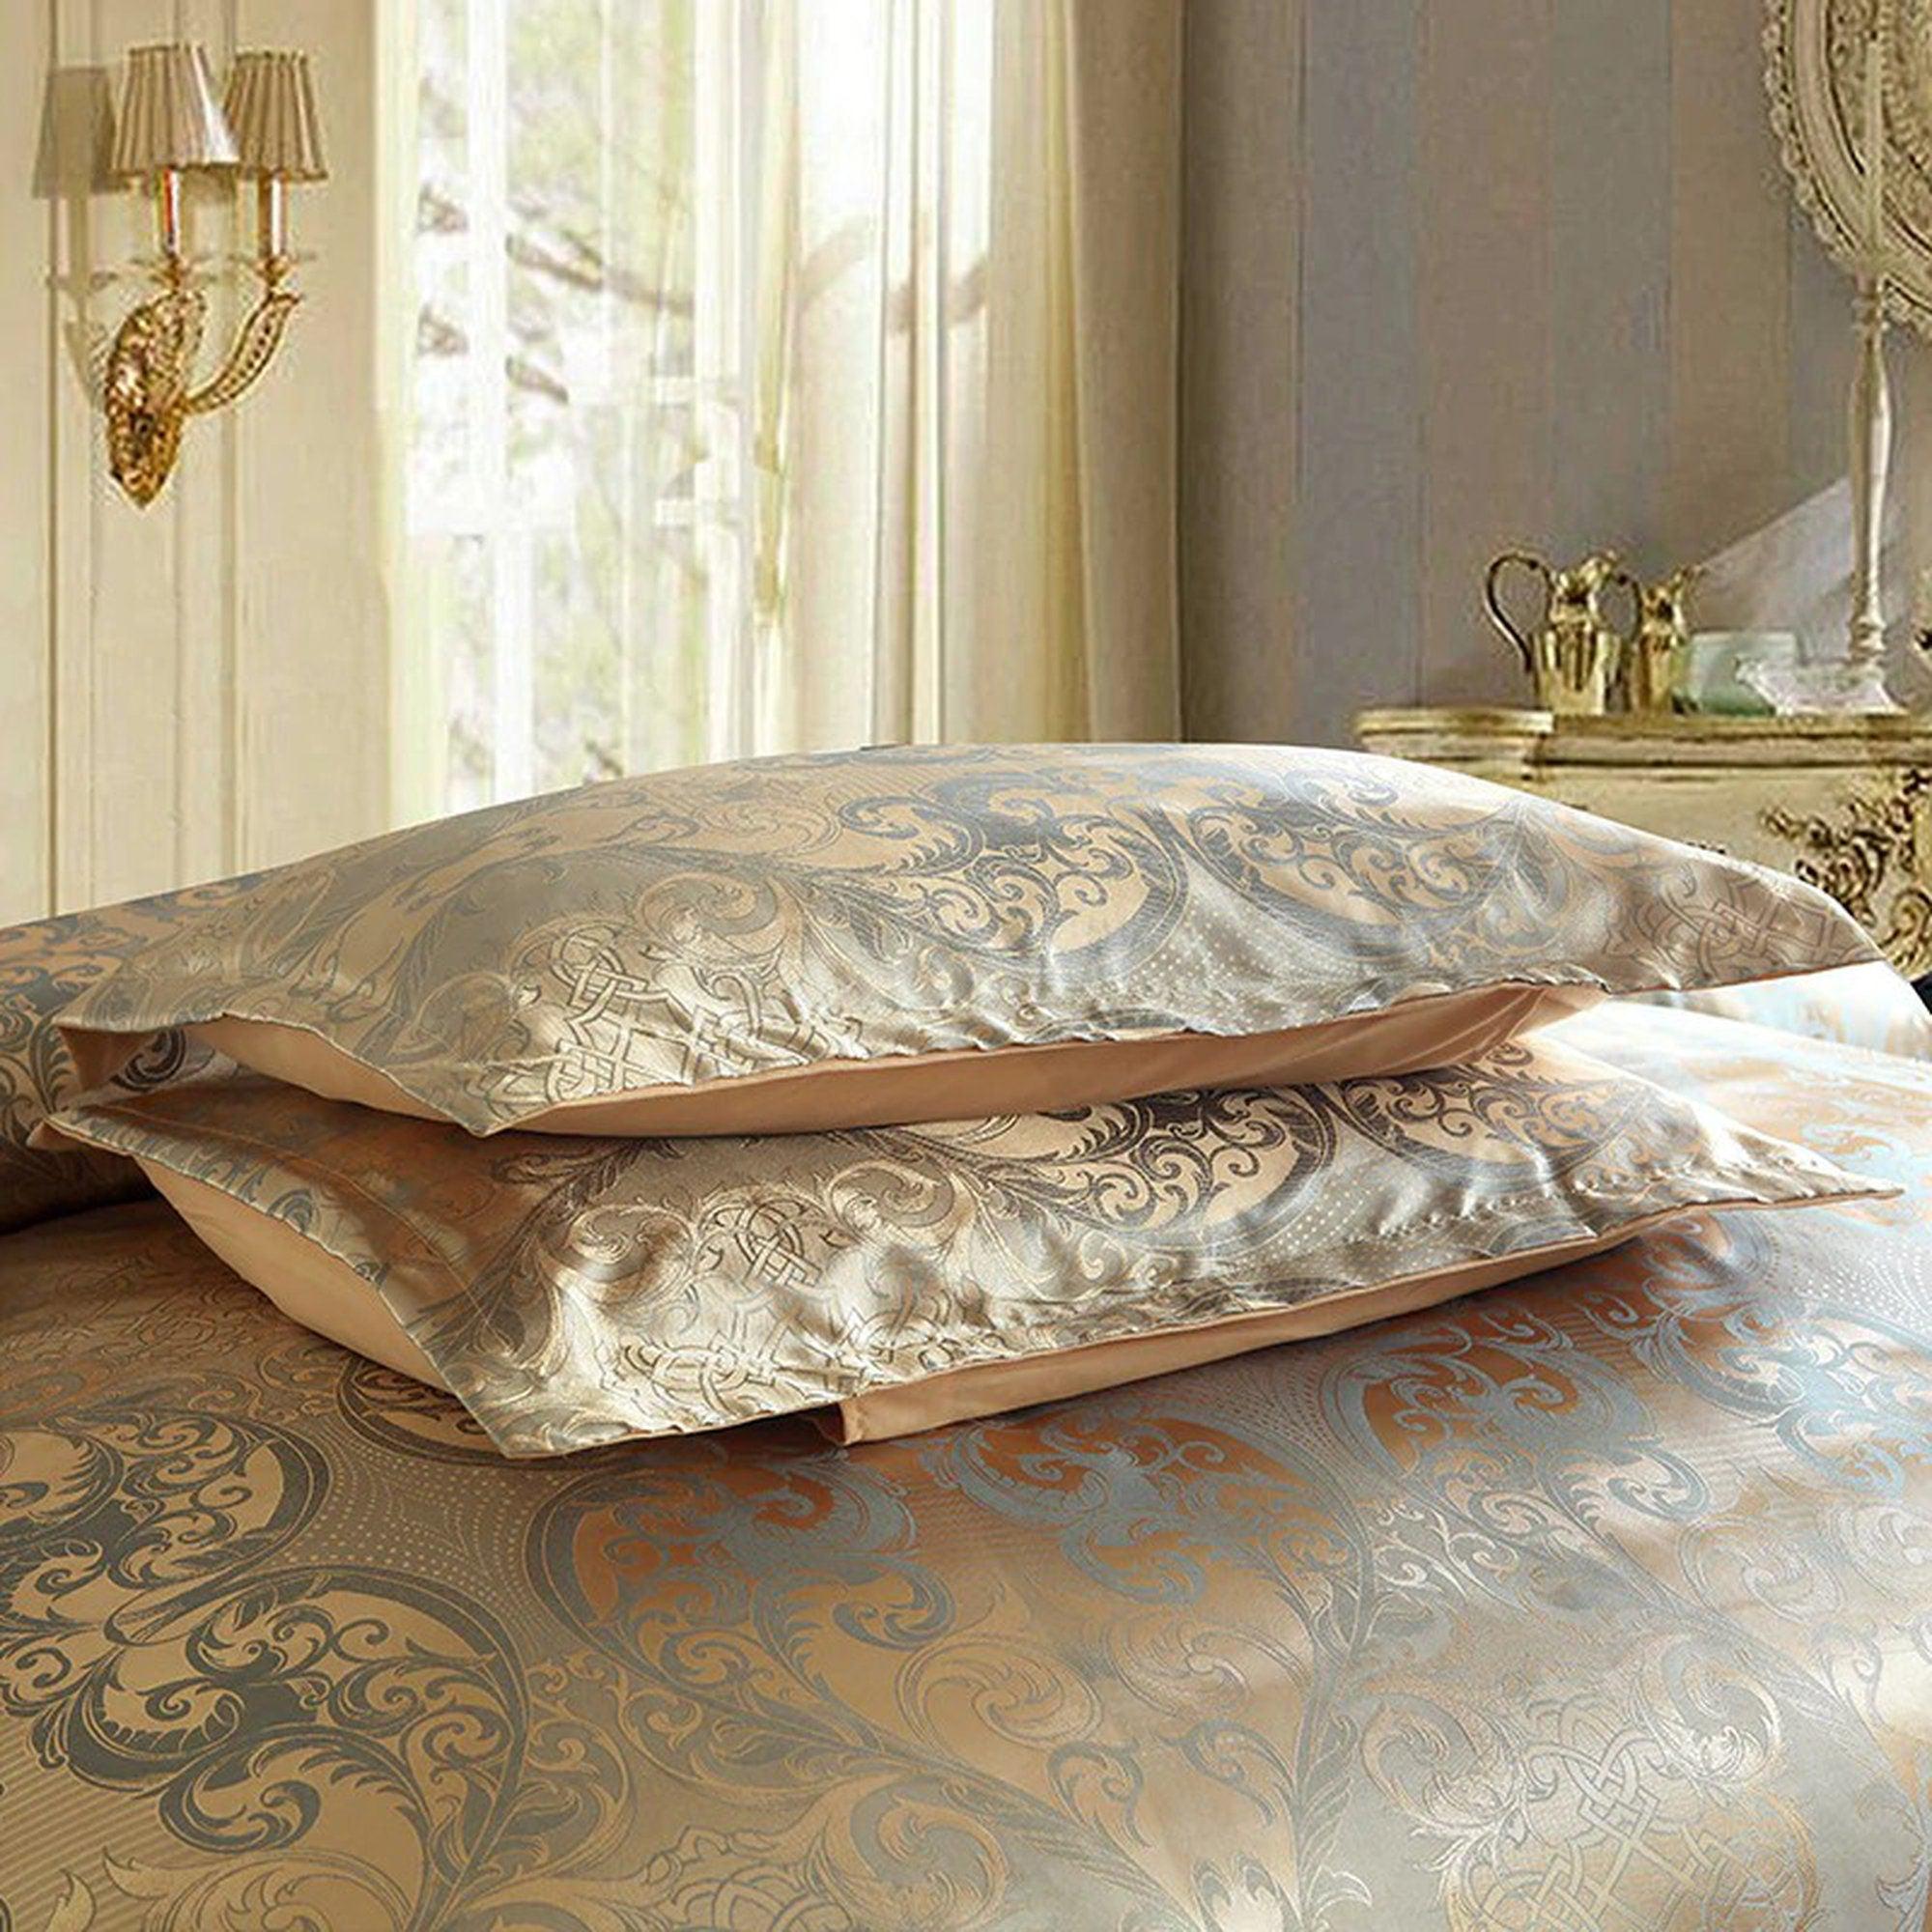 daintyduvet Luxury Gold Bedding made with Silky Jacquard Fabric, Damask Duvet Cover Set, Designer Bedding, Aesthetic Duvet King Queen Full Twin